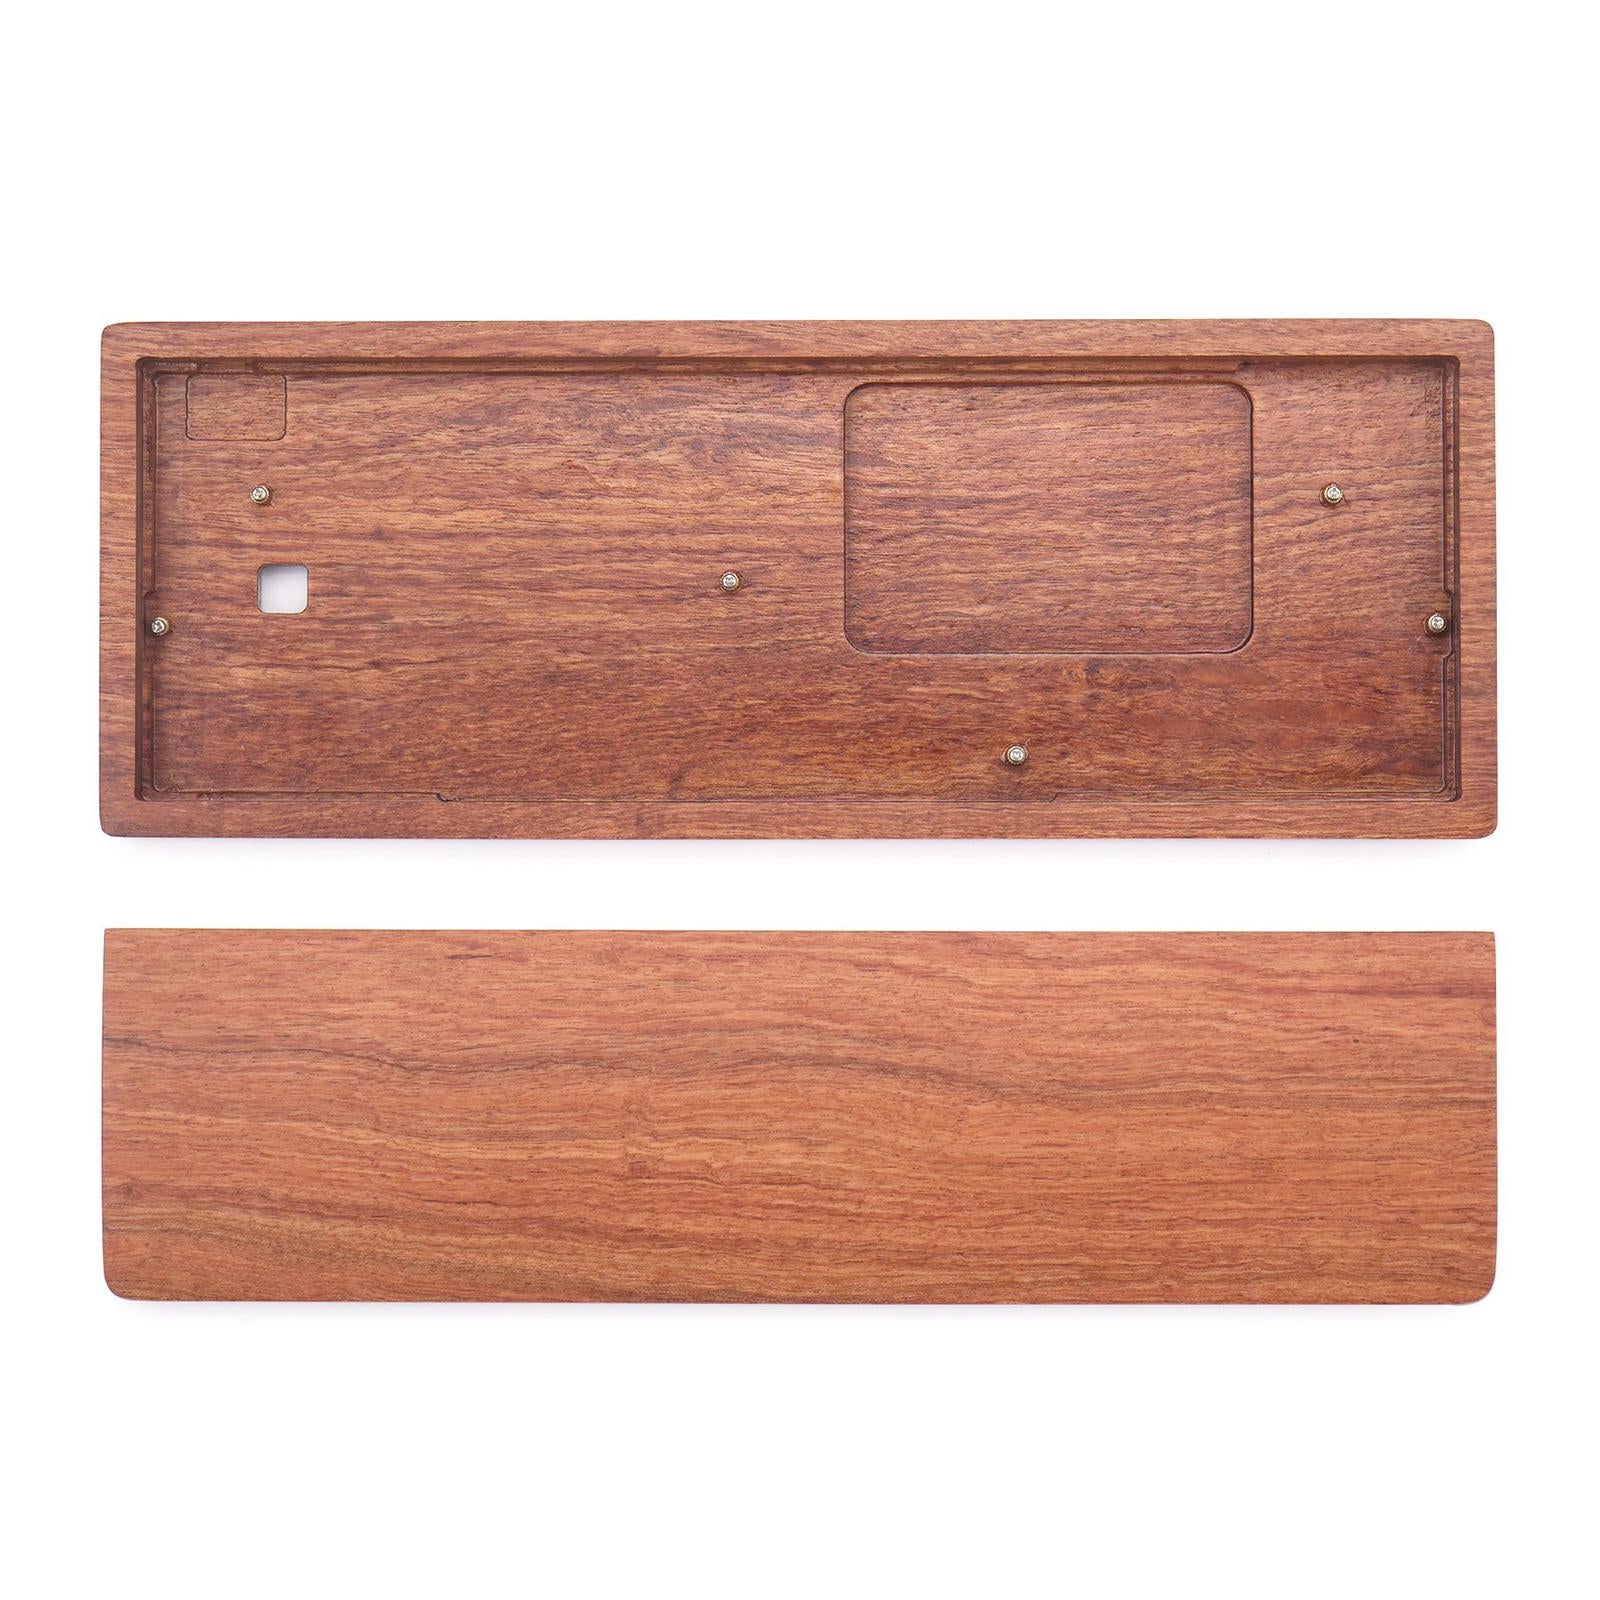 Wooden Case for GK61X GK61XS GK64X Mechanical Keyboard Rosewood